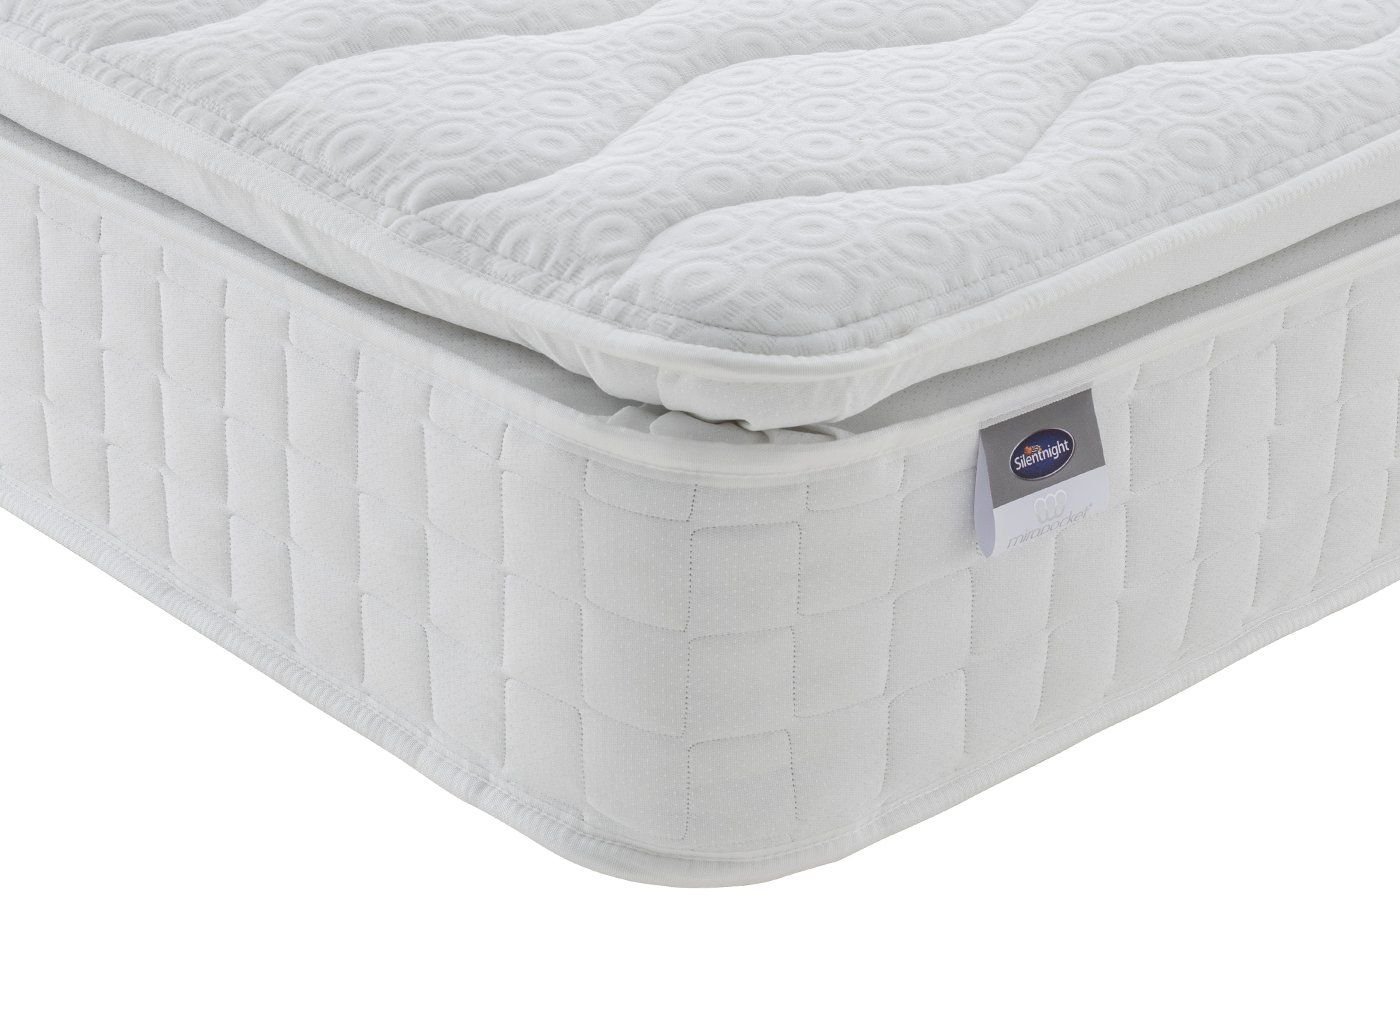 silentnight pocket essentials 1000 double mattress review